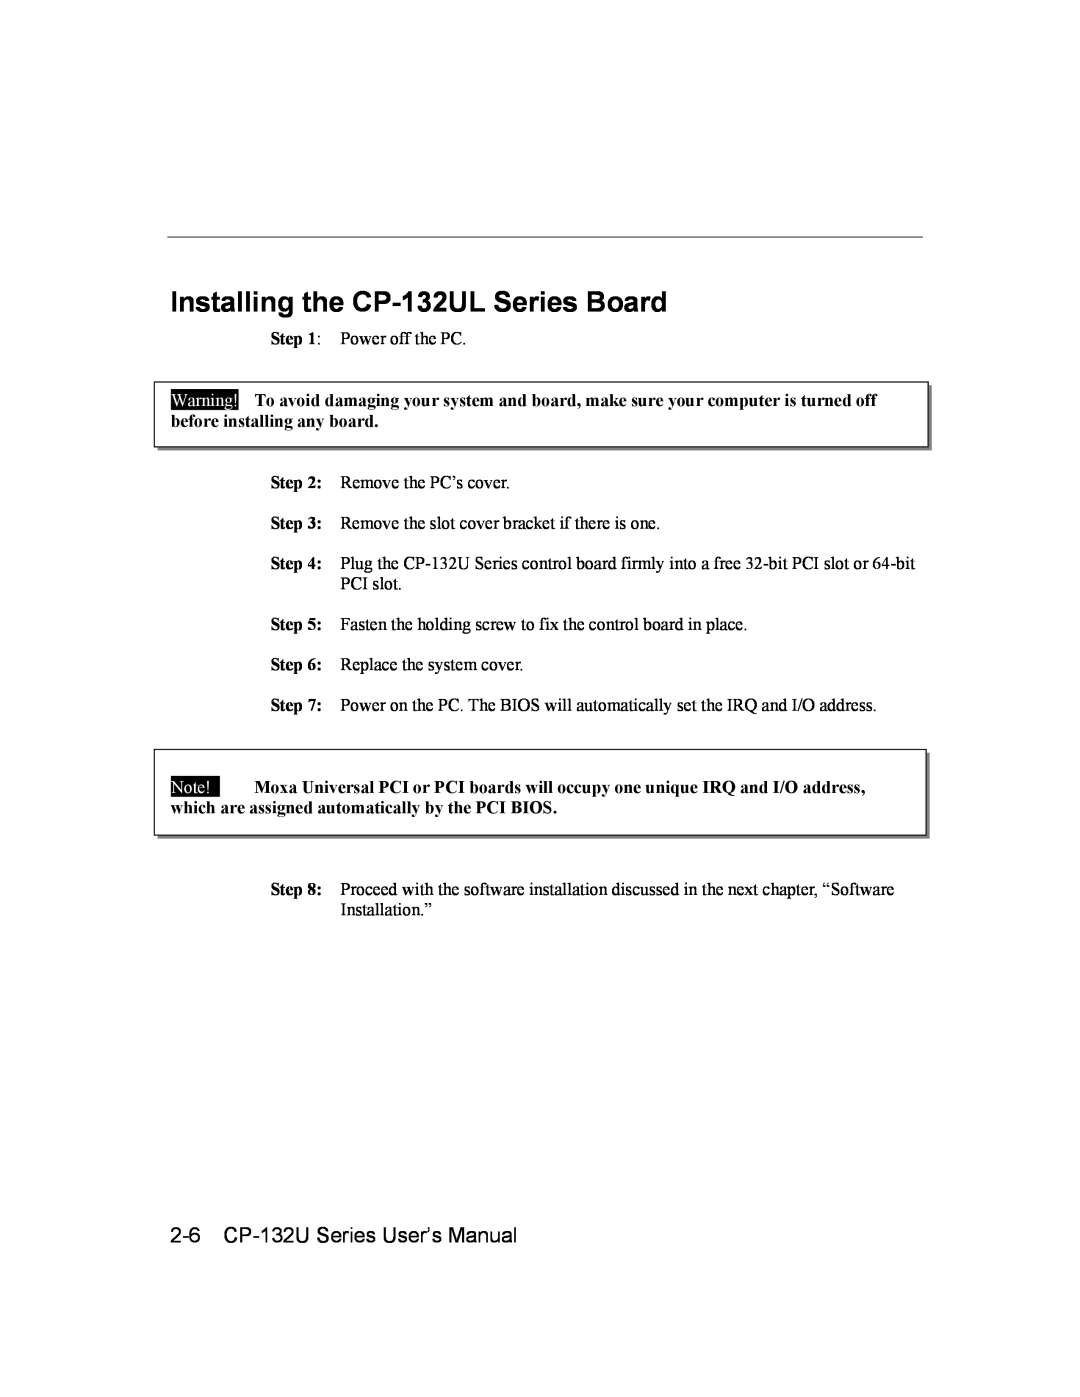 Moxa Technologies user manual Installing the CP-132UL Series Board, 2-6 CP-132U Series User’s Manual 